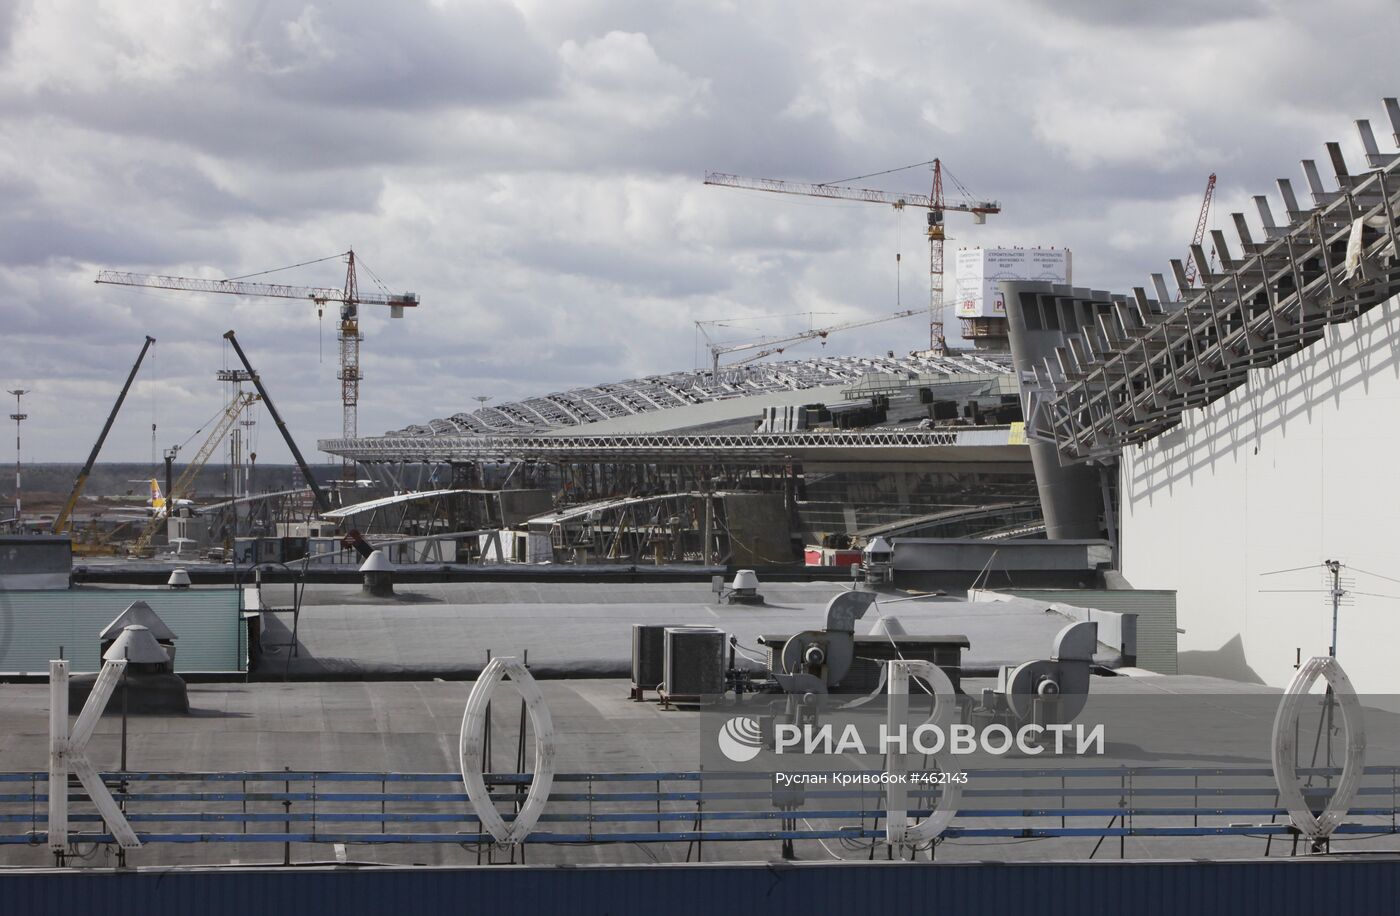 Строительство нового международного терминала аэропорта "Внуково